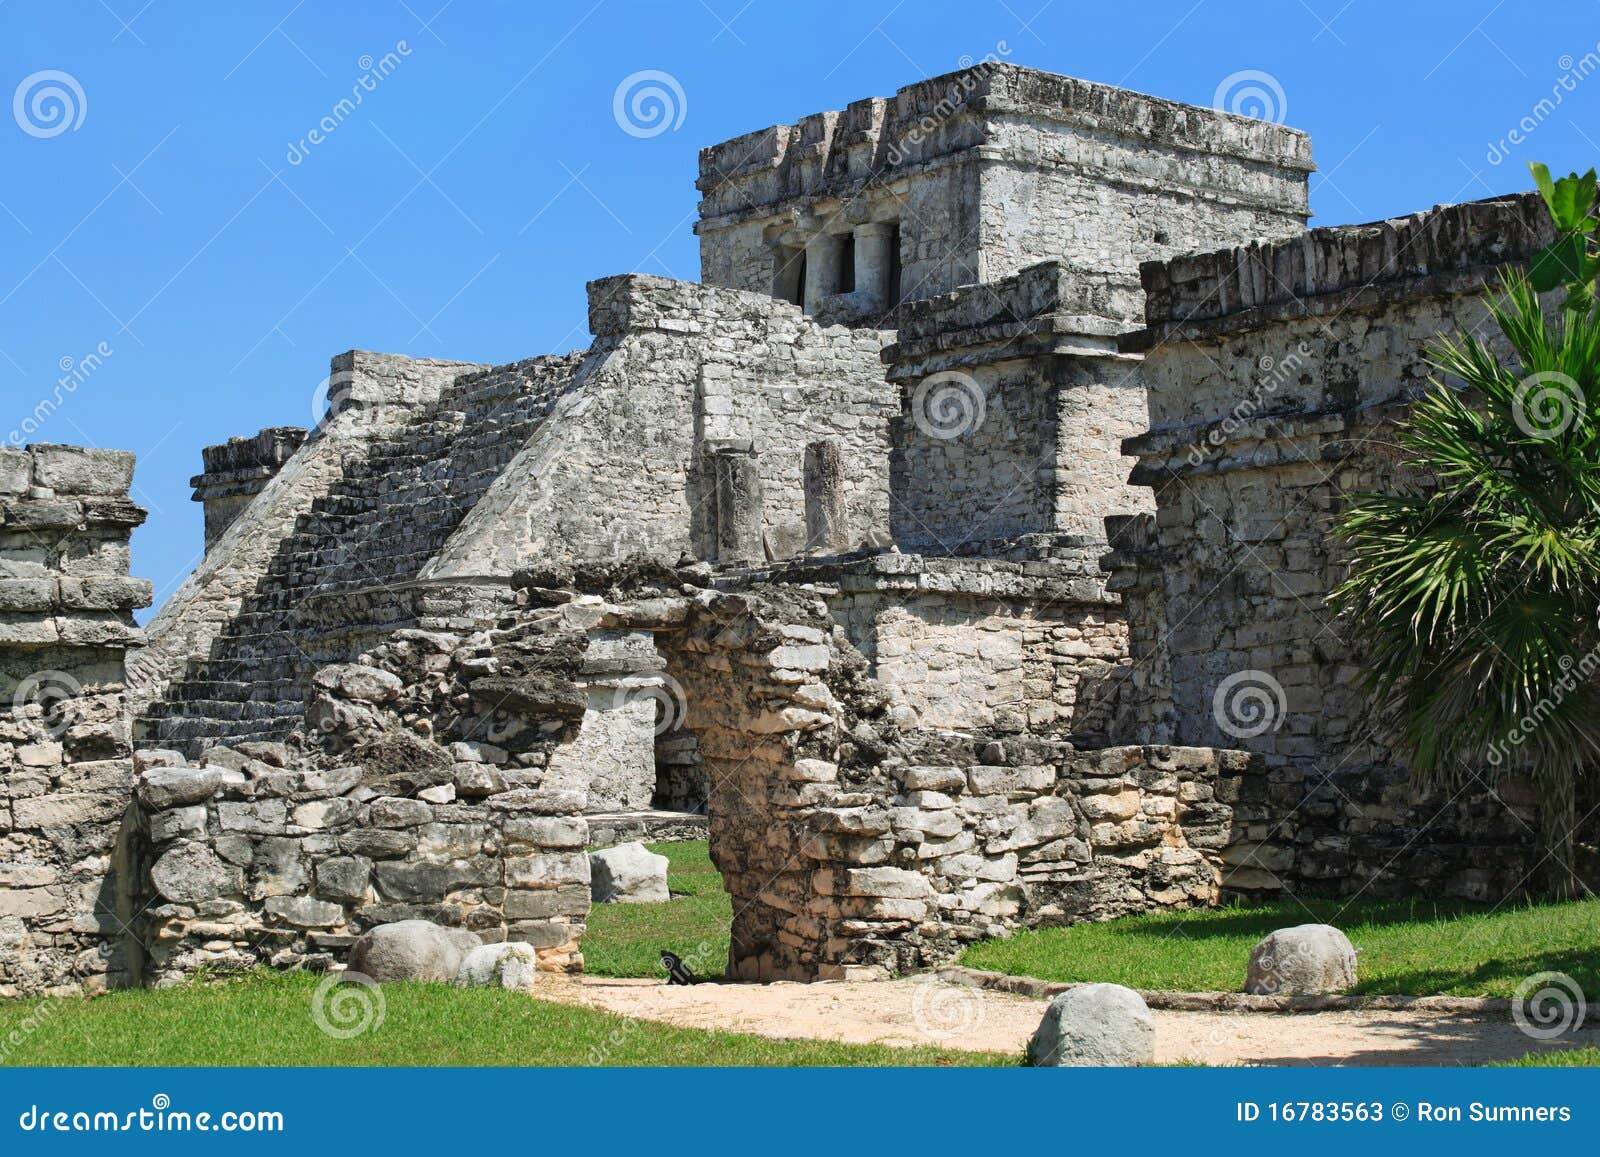 mayan ruins of tulum mexico